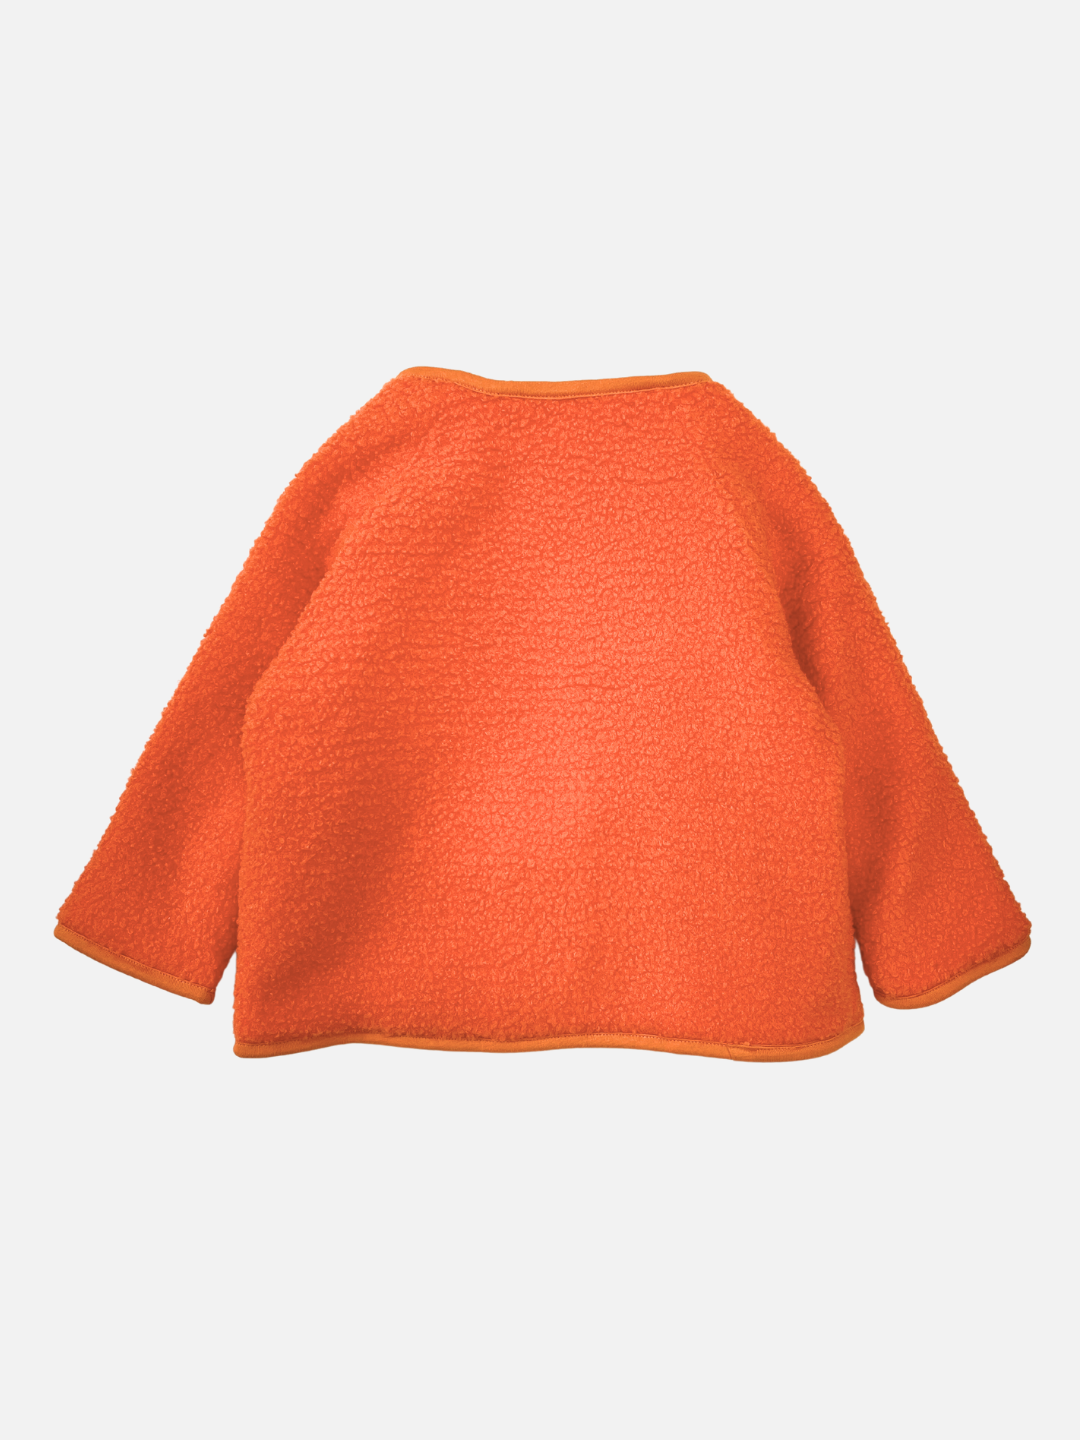 Tangerine | Back view of a kids orange collarless fleece jacket.